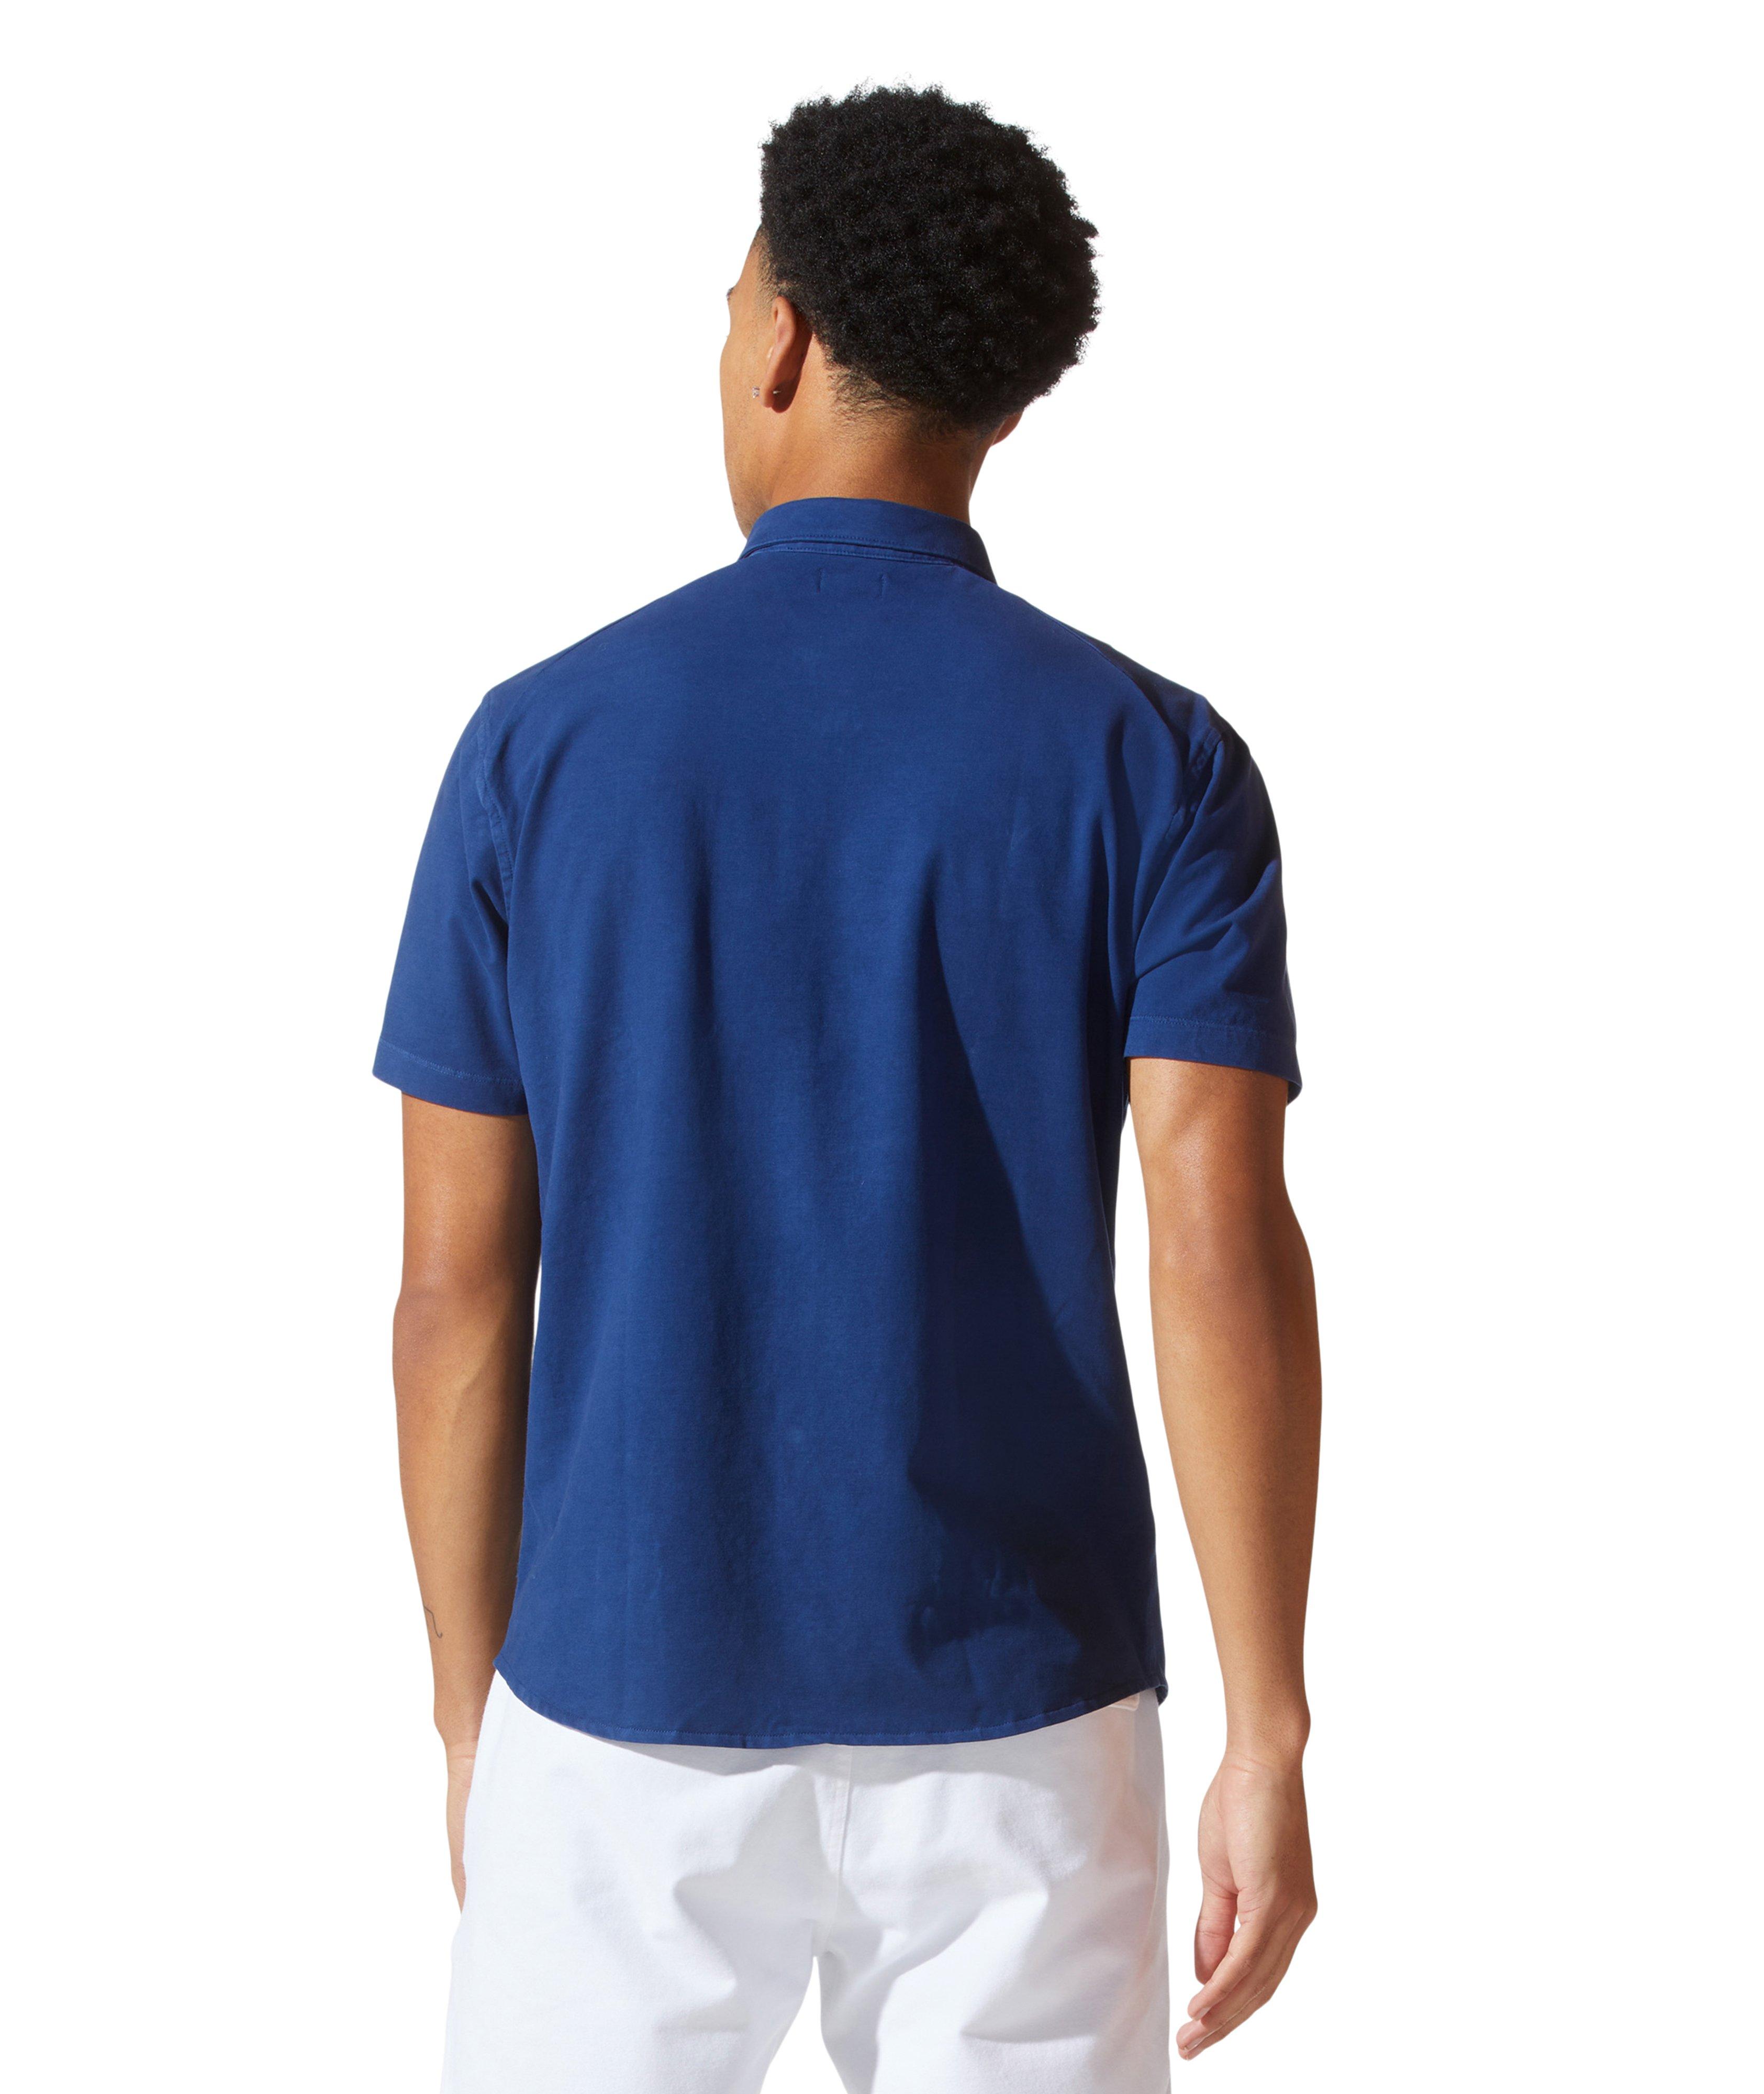 Flex Pro Lite On-Point Soft Shirt image 1